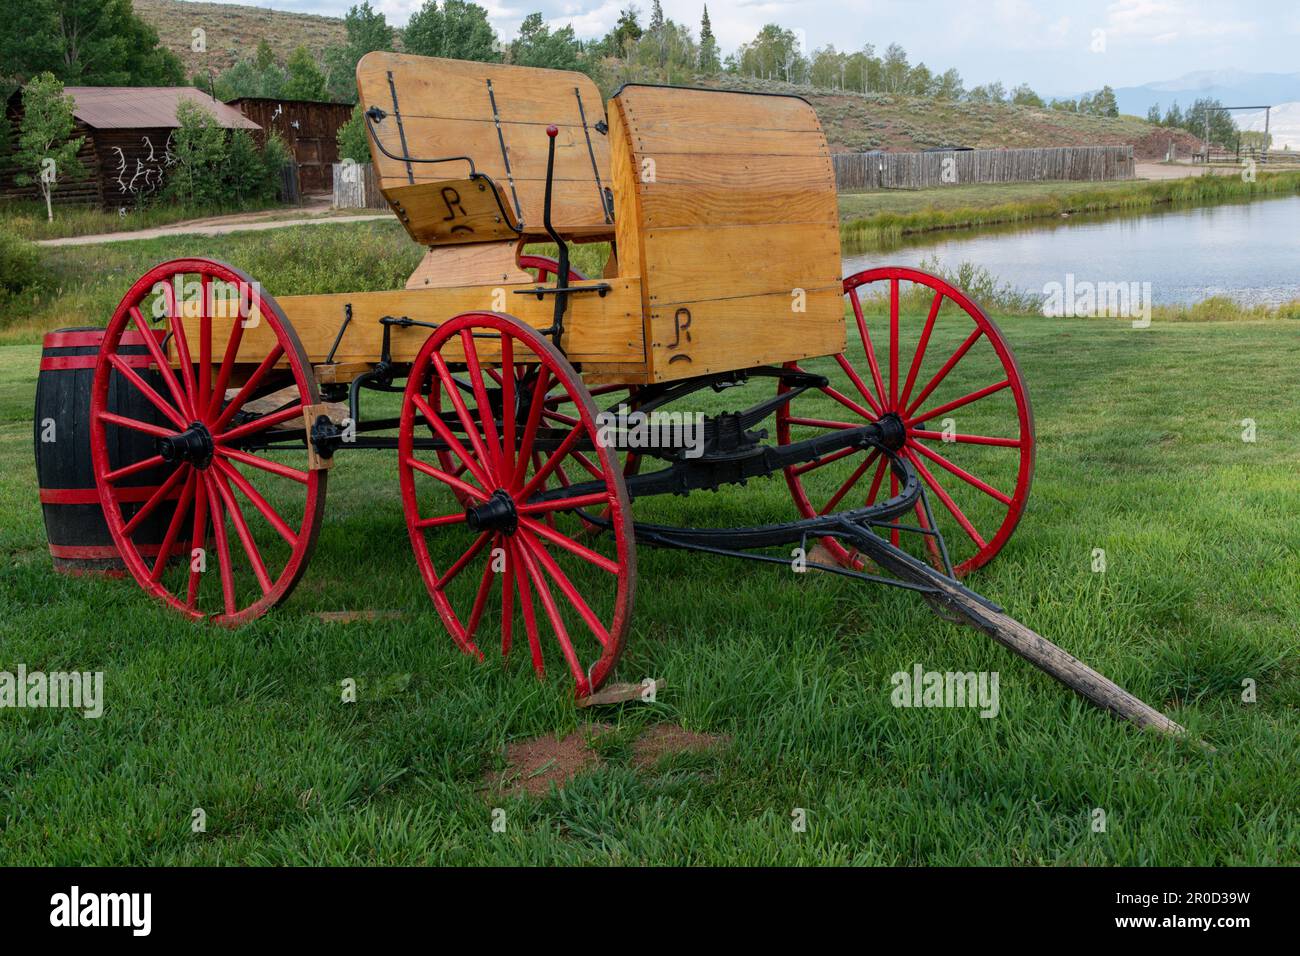 Picturesque Wagon with Red Wheels at Latigo Dude Ranch in Colorado Stock Photo